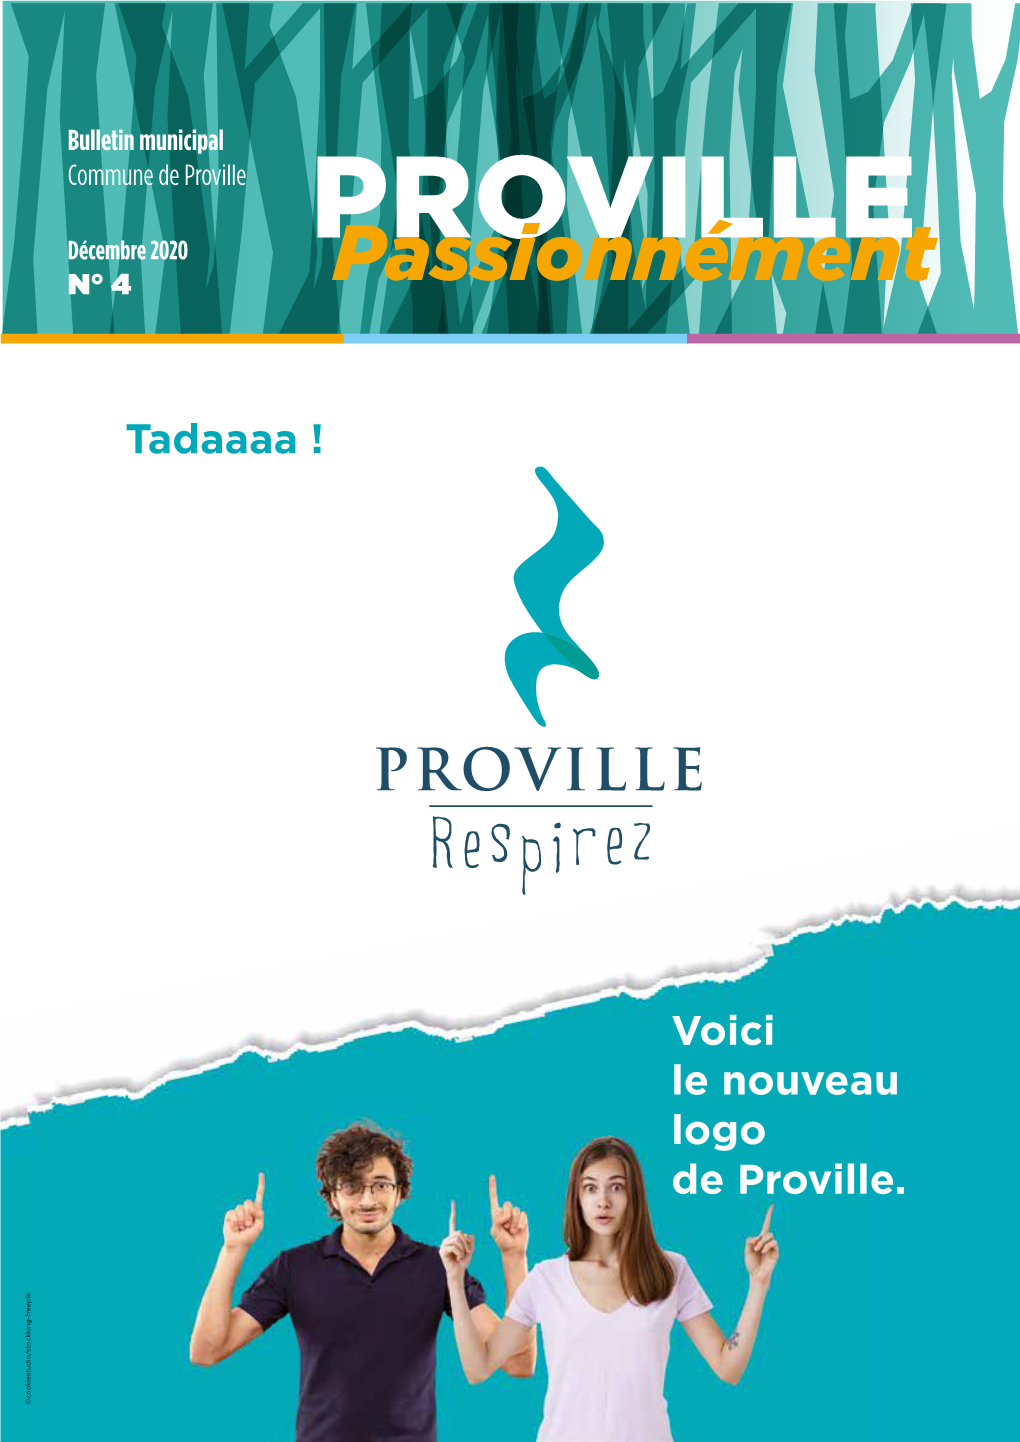 Proville-Passio-A3 N°4 Dec -2020.Pdf